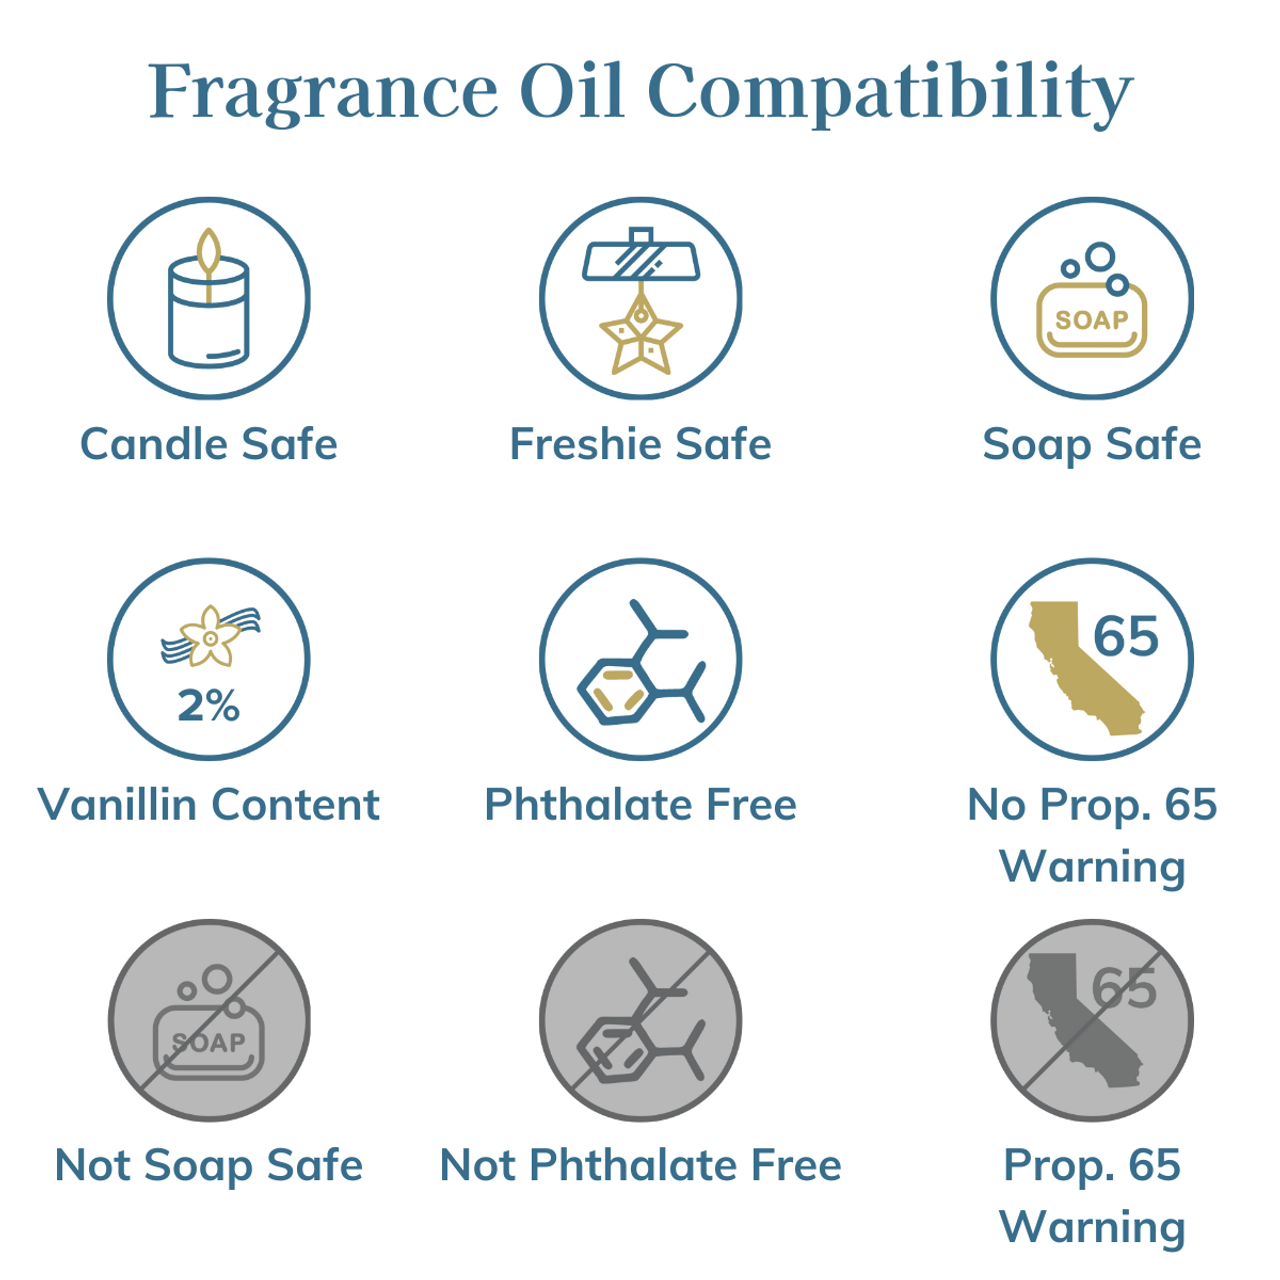 Fragrances & More - Magnolia Fragrance Oil for Candle Making 2 oz. (60ml)  Candle Scents for Candle Making. Scented Oil for Home. Essential Oils for